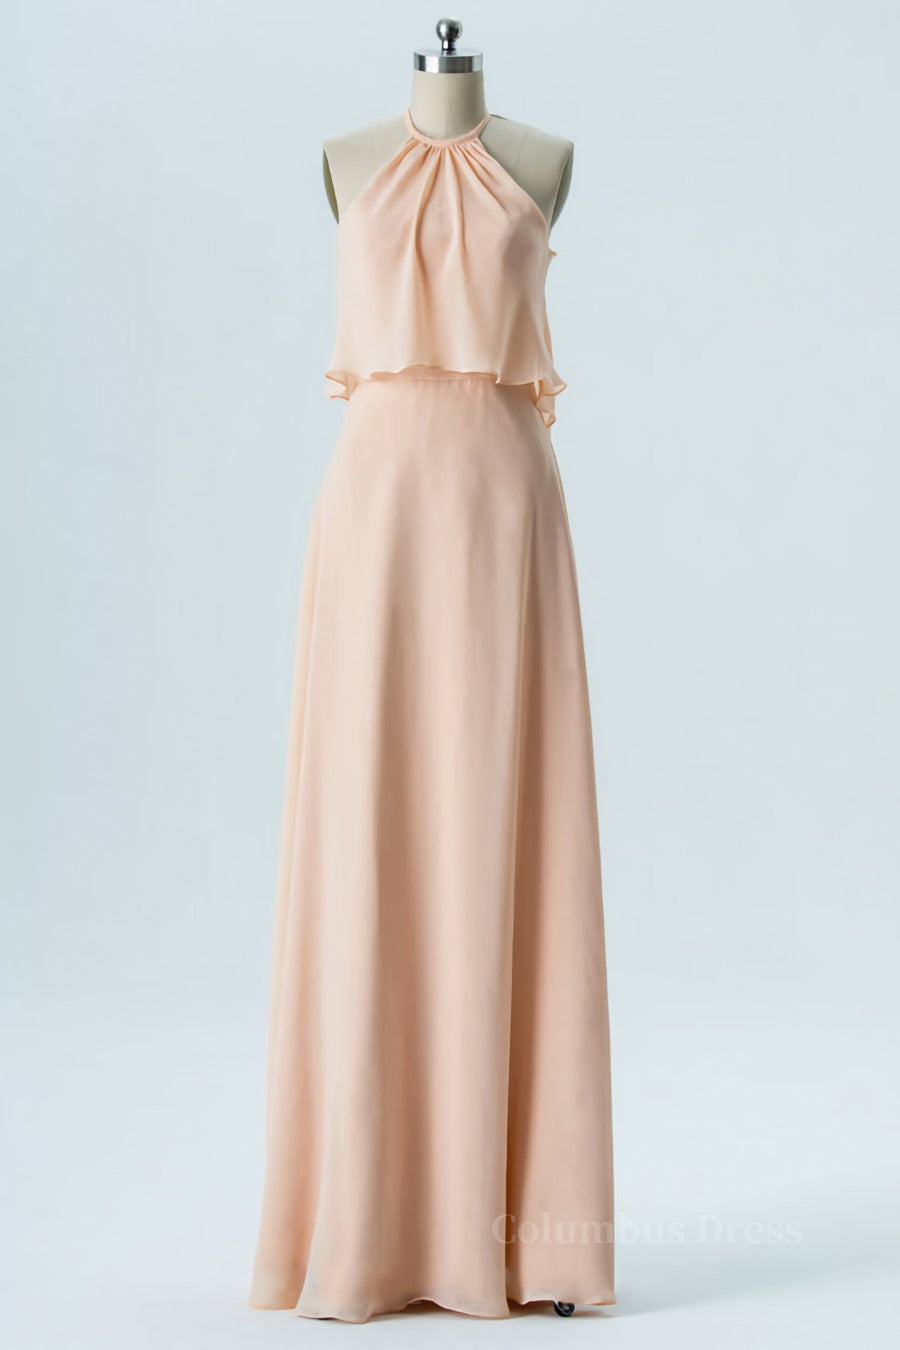 Peach Jewel Chiffon Flounce Chiffon A-line Long Corset Bridesmaid Dress outfit, Bridesmaid Dresses For Girls